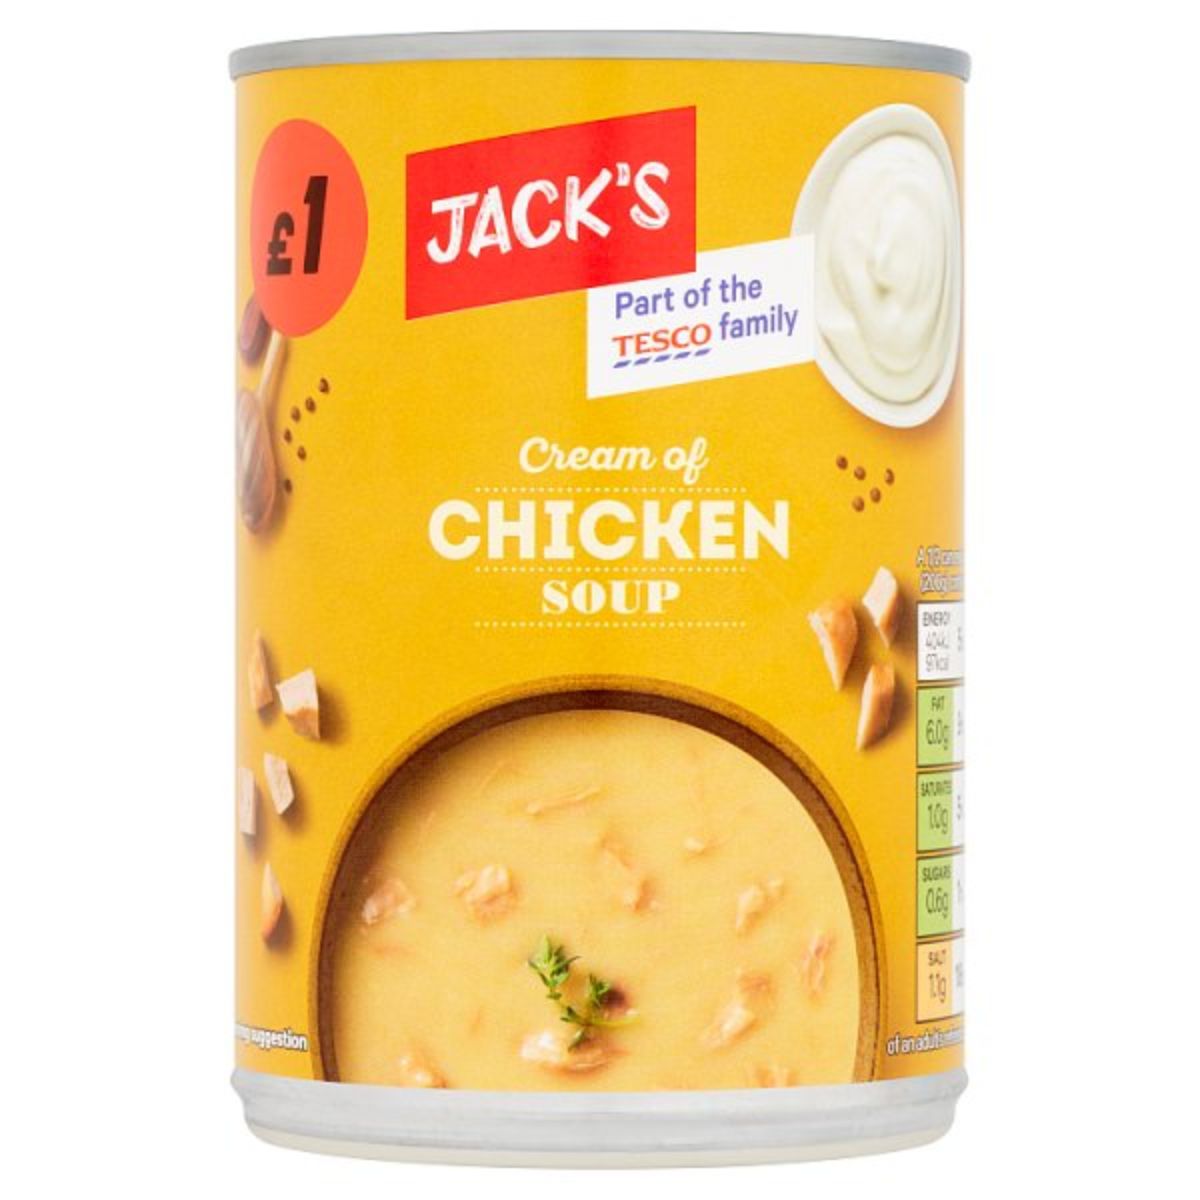 Jacks - Cream of Chicken Soup - 400g.